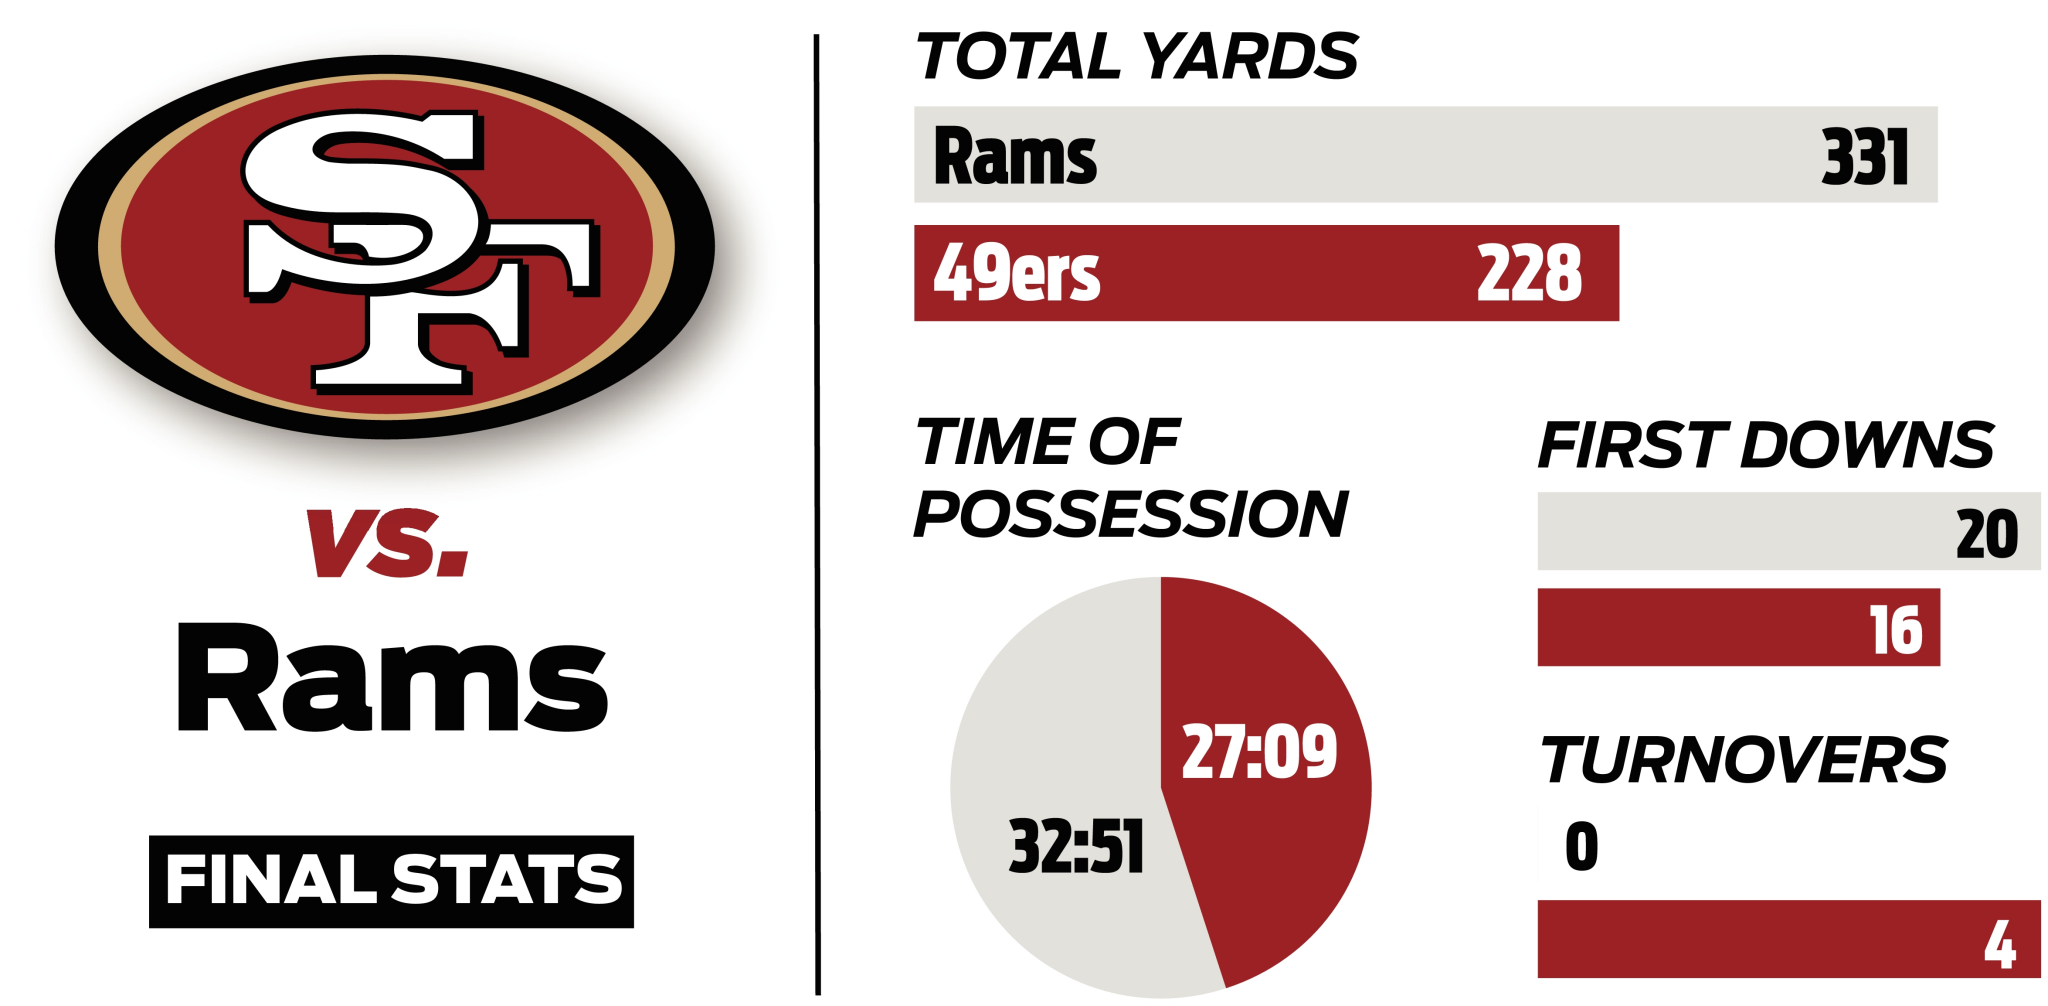 49ers' stats and vs. Rams